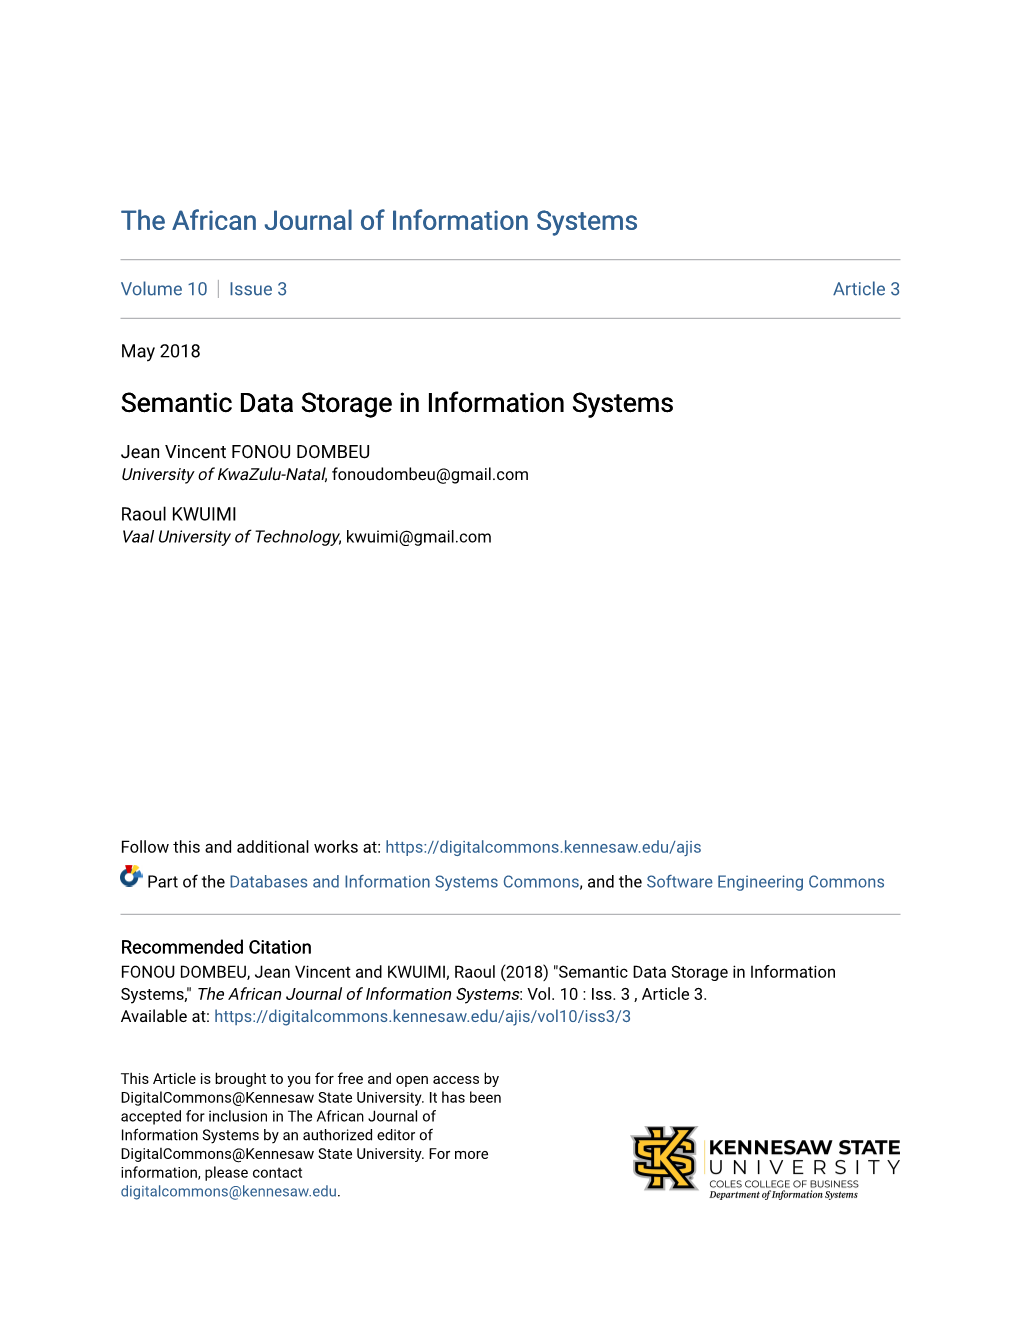 Semantic Data Storage in Information Systems